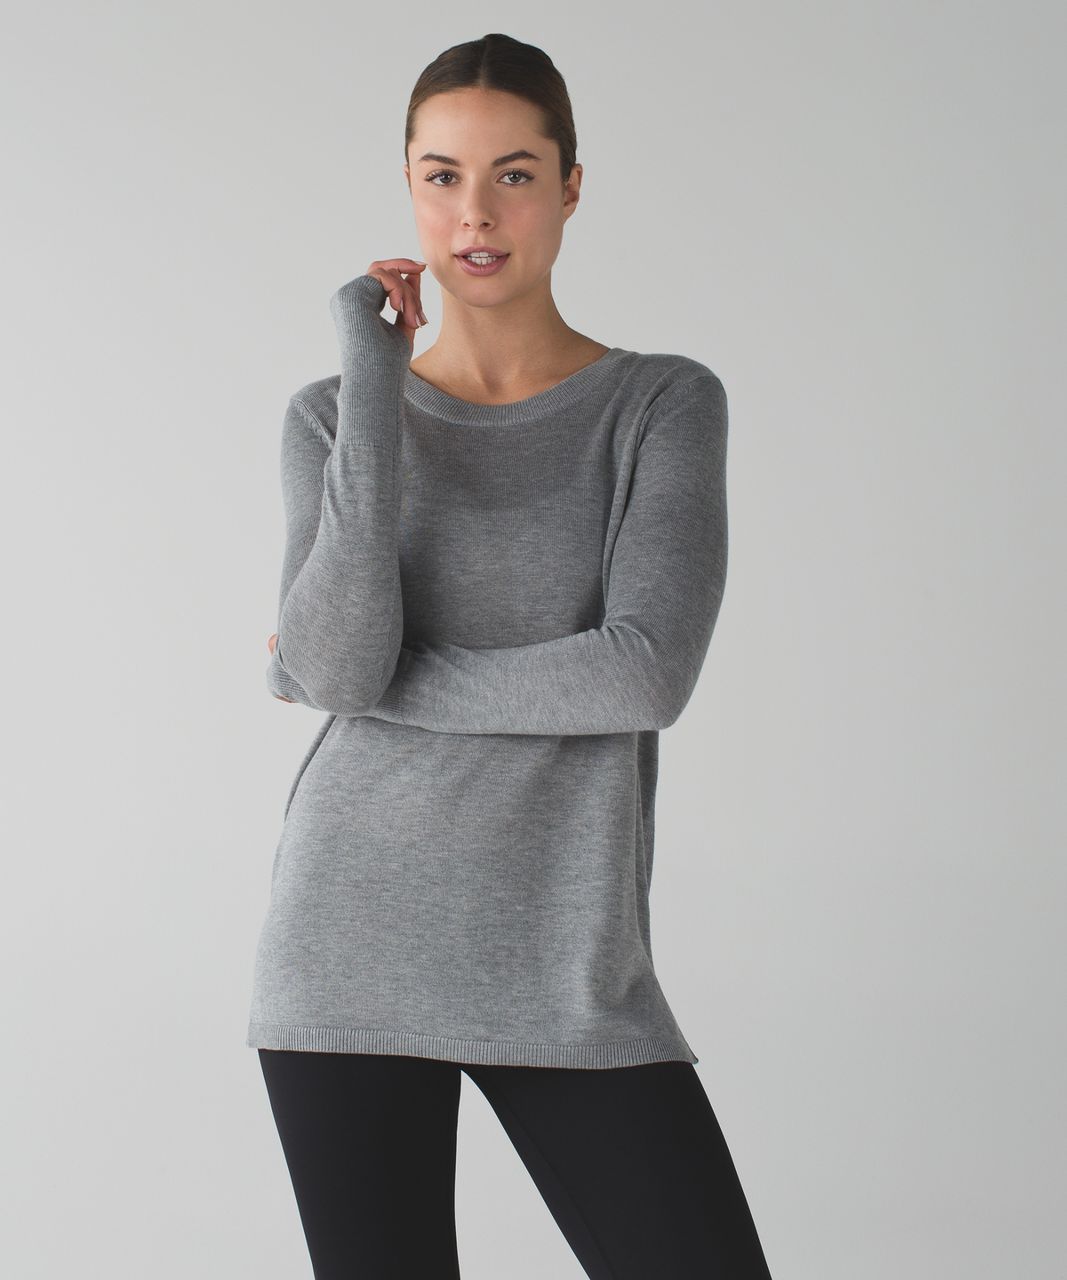 Lululemon Bring It Backbend Sweater - Heathered Medium Grey